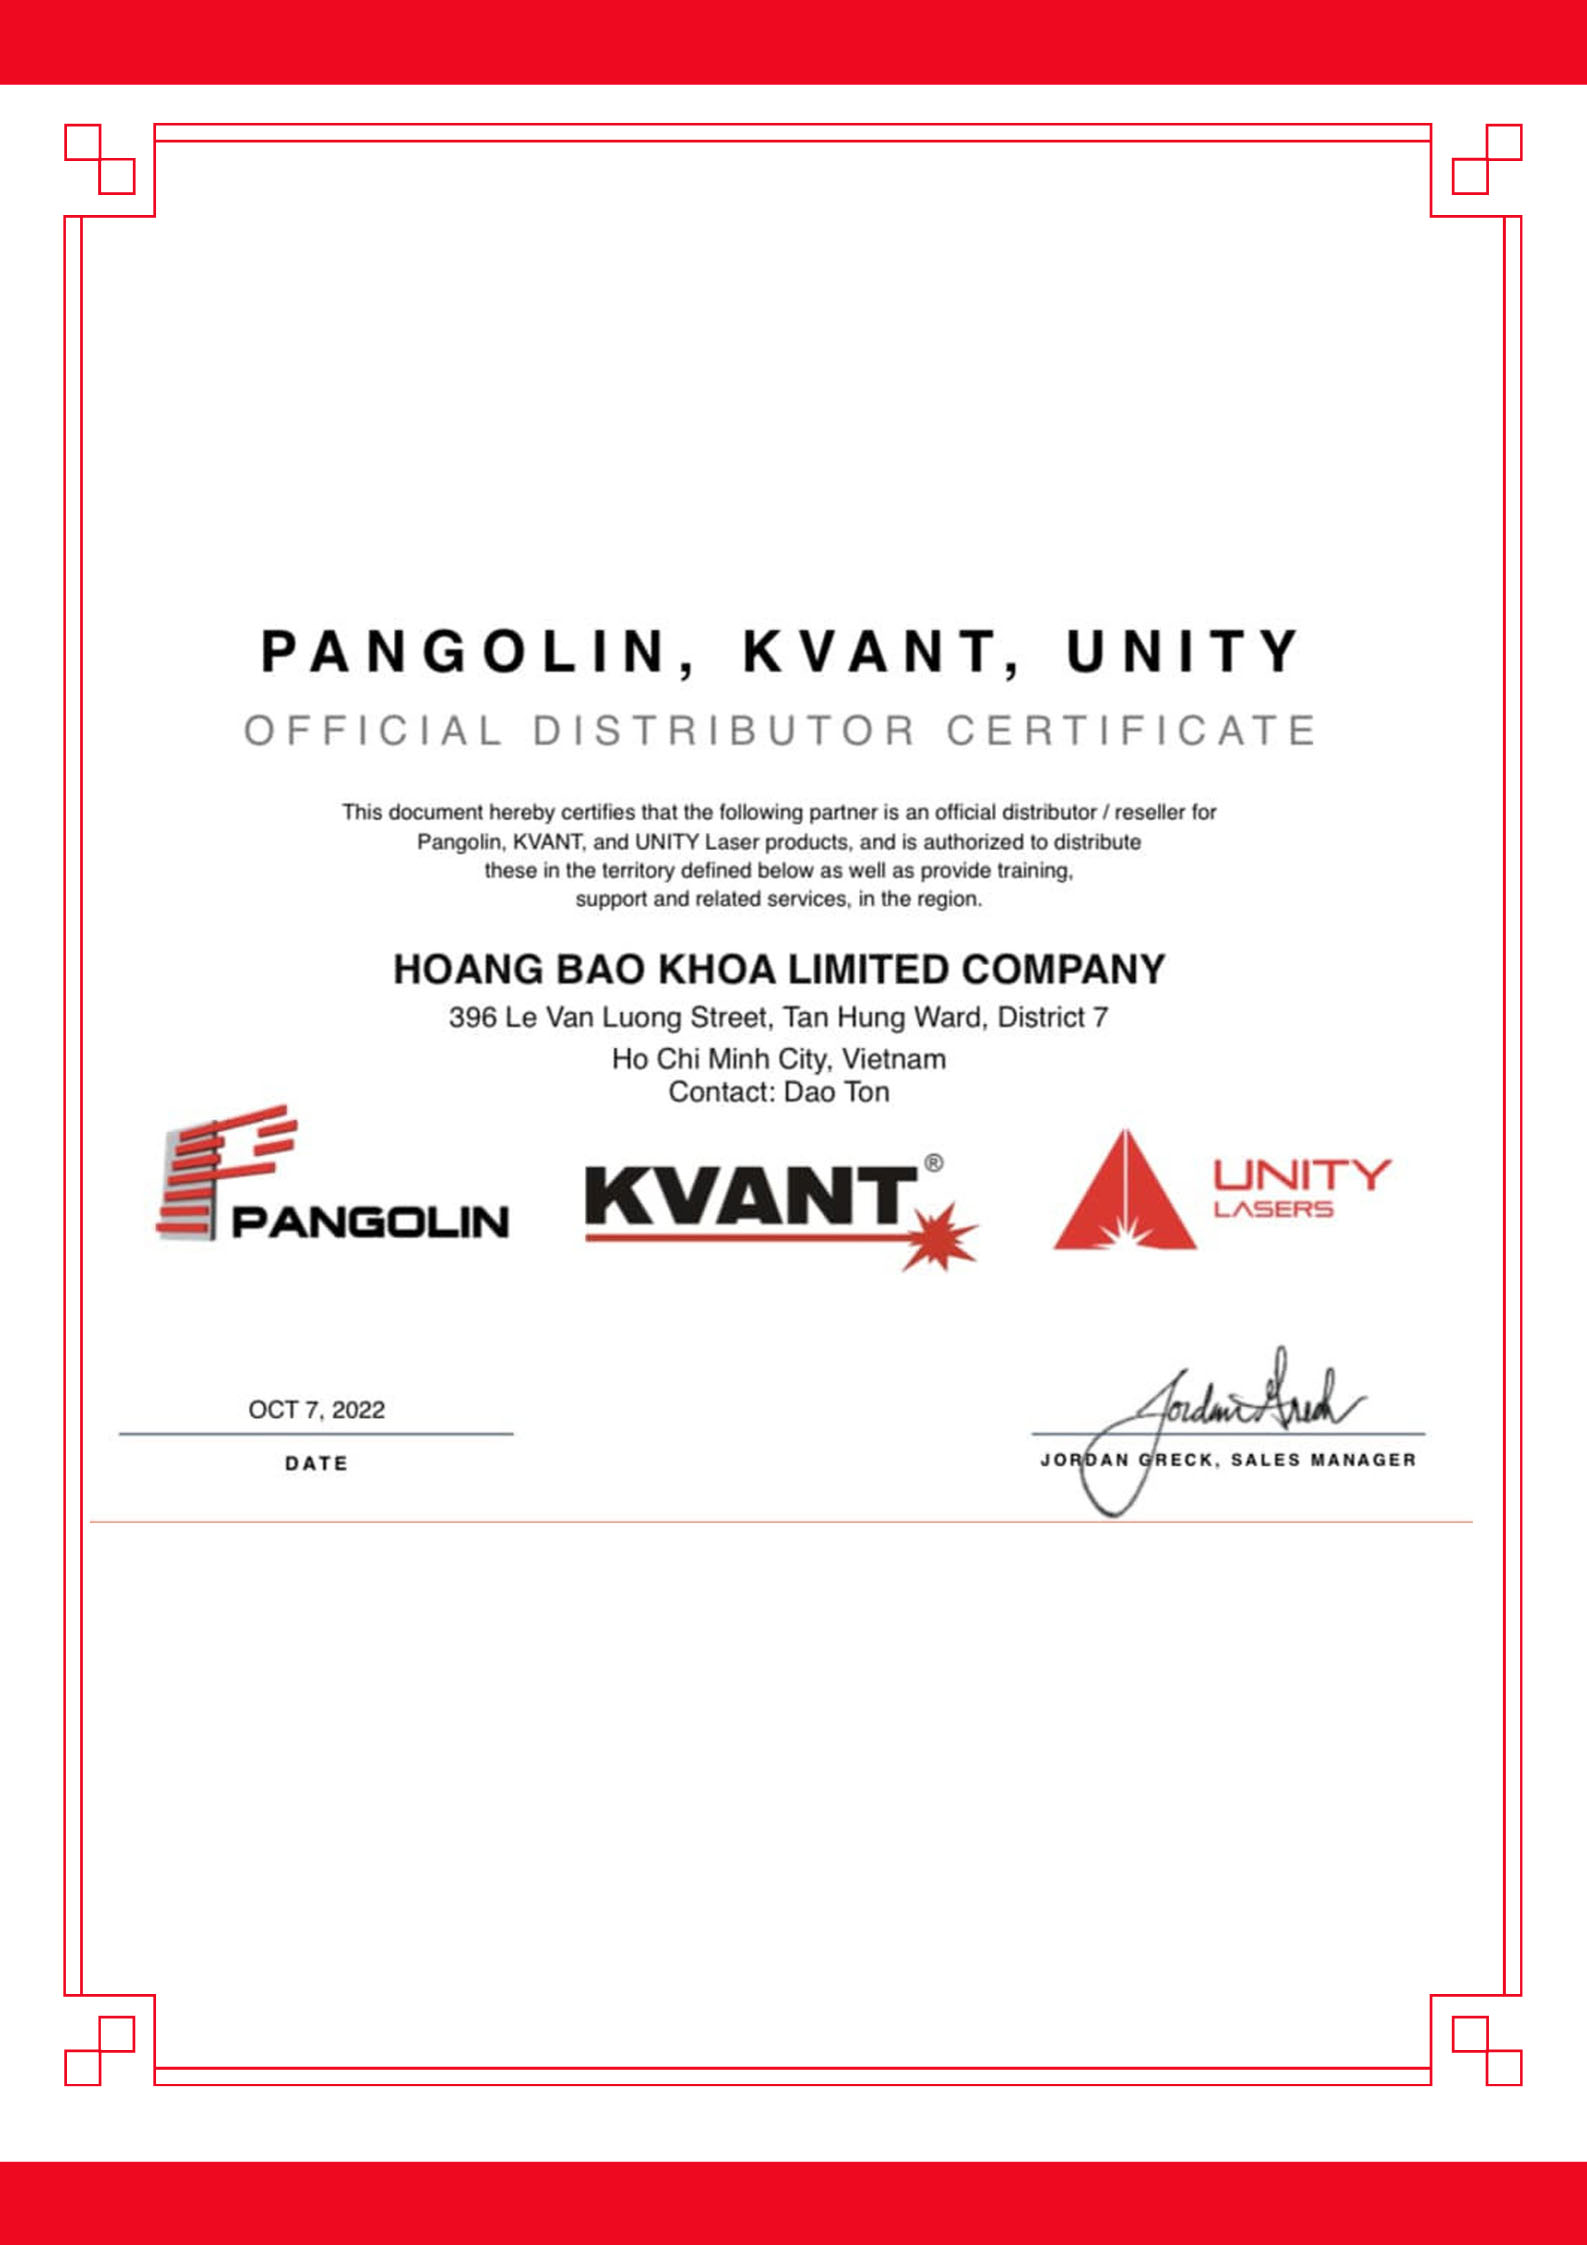 Pangolin, Kvant, Unity distributor certificate